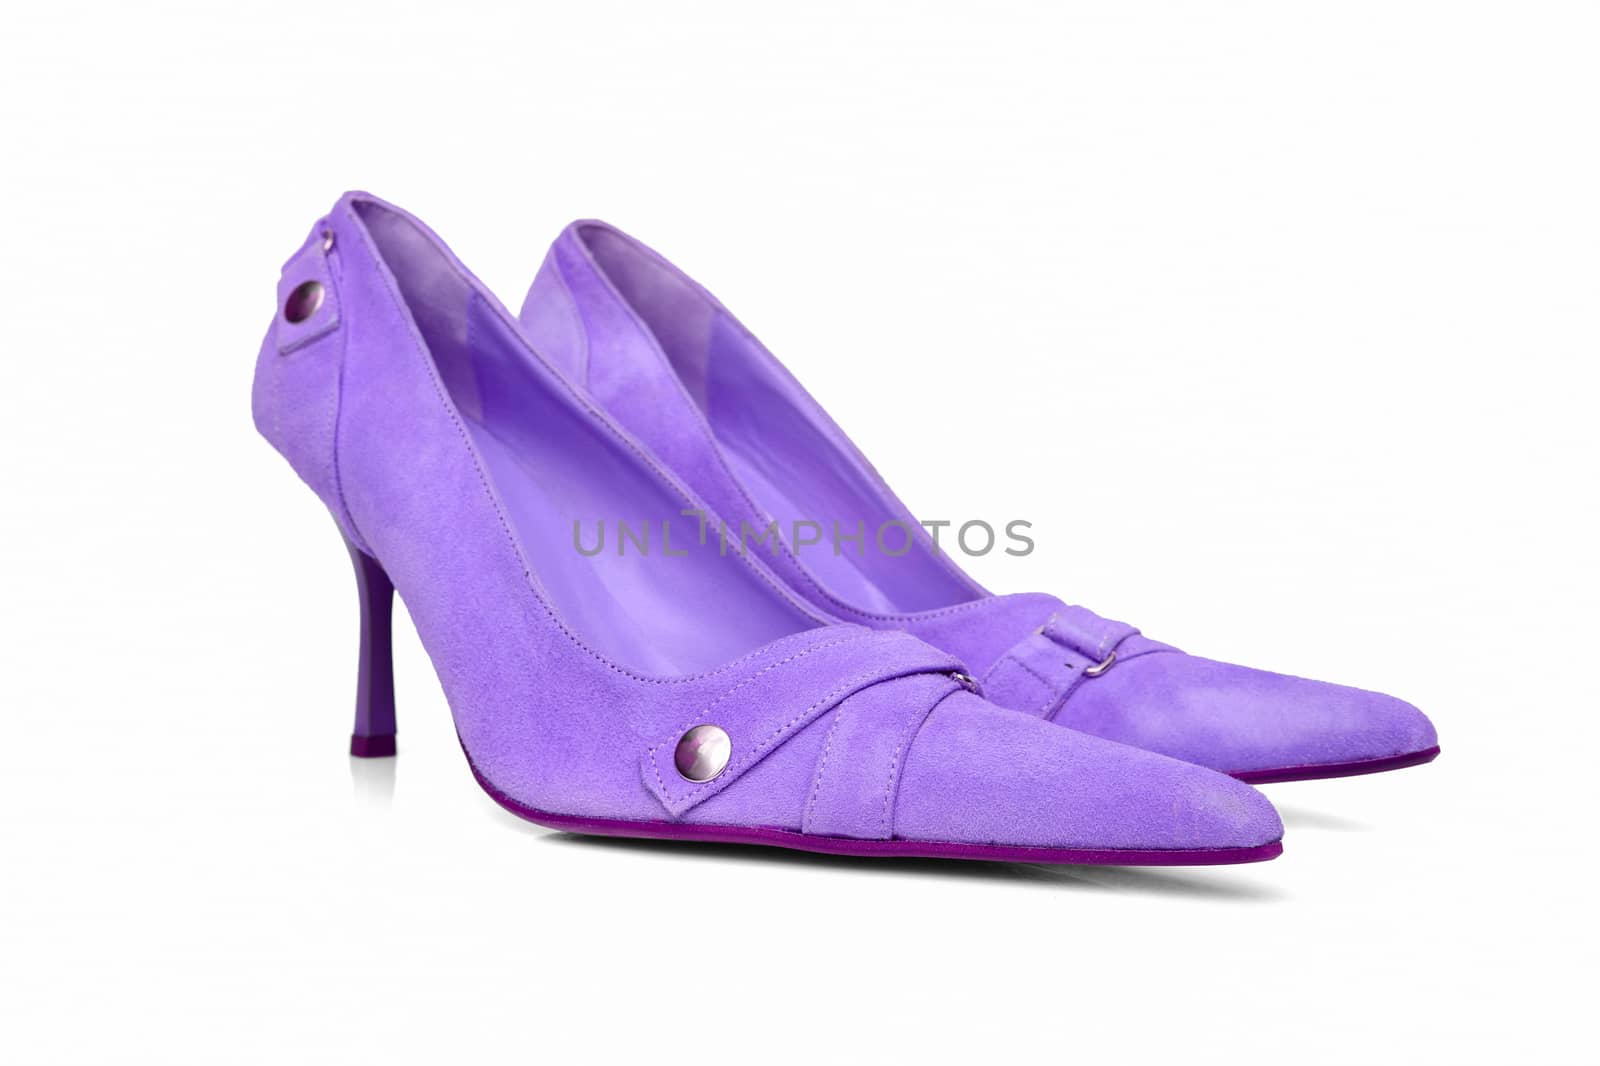 Female purple leather shoes on white background, isolated product.